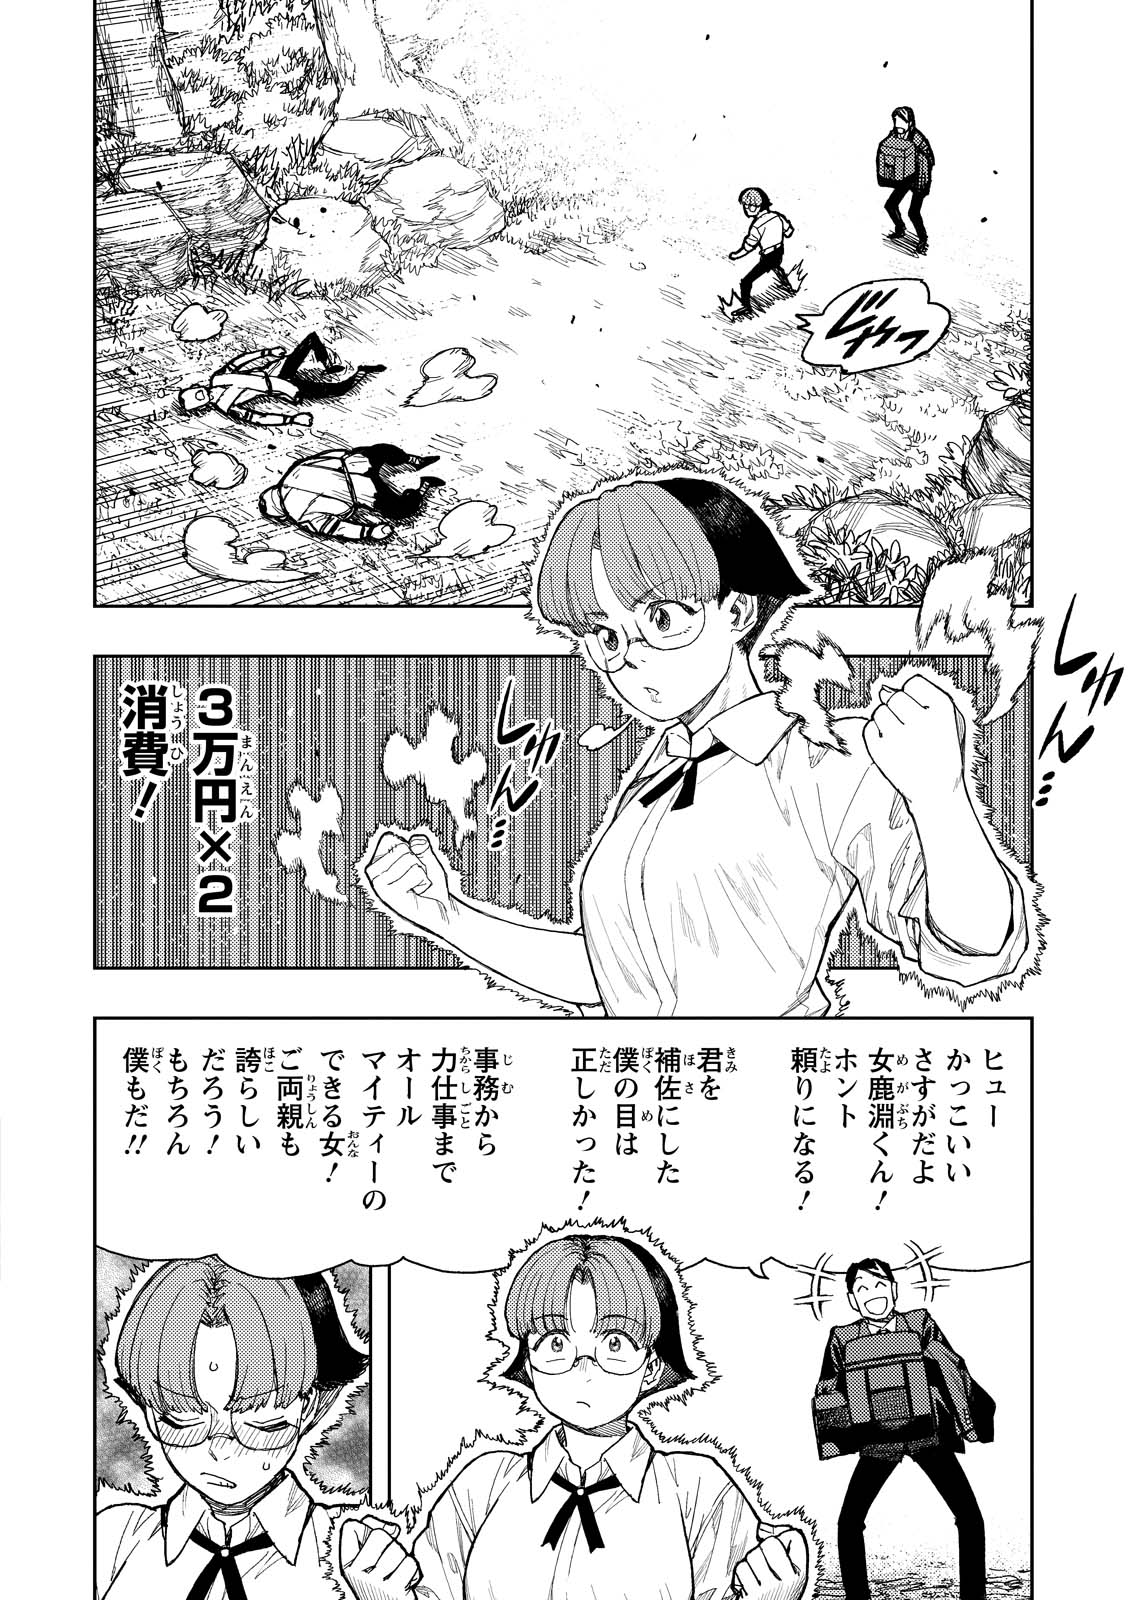 Tsugumomo - Chapter 166 - Page 12